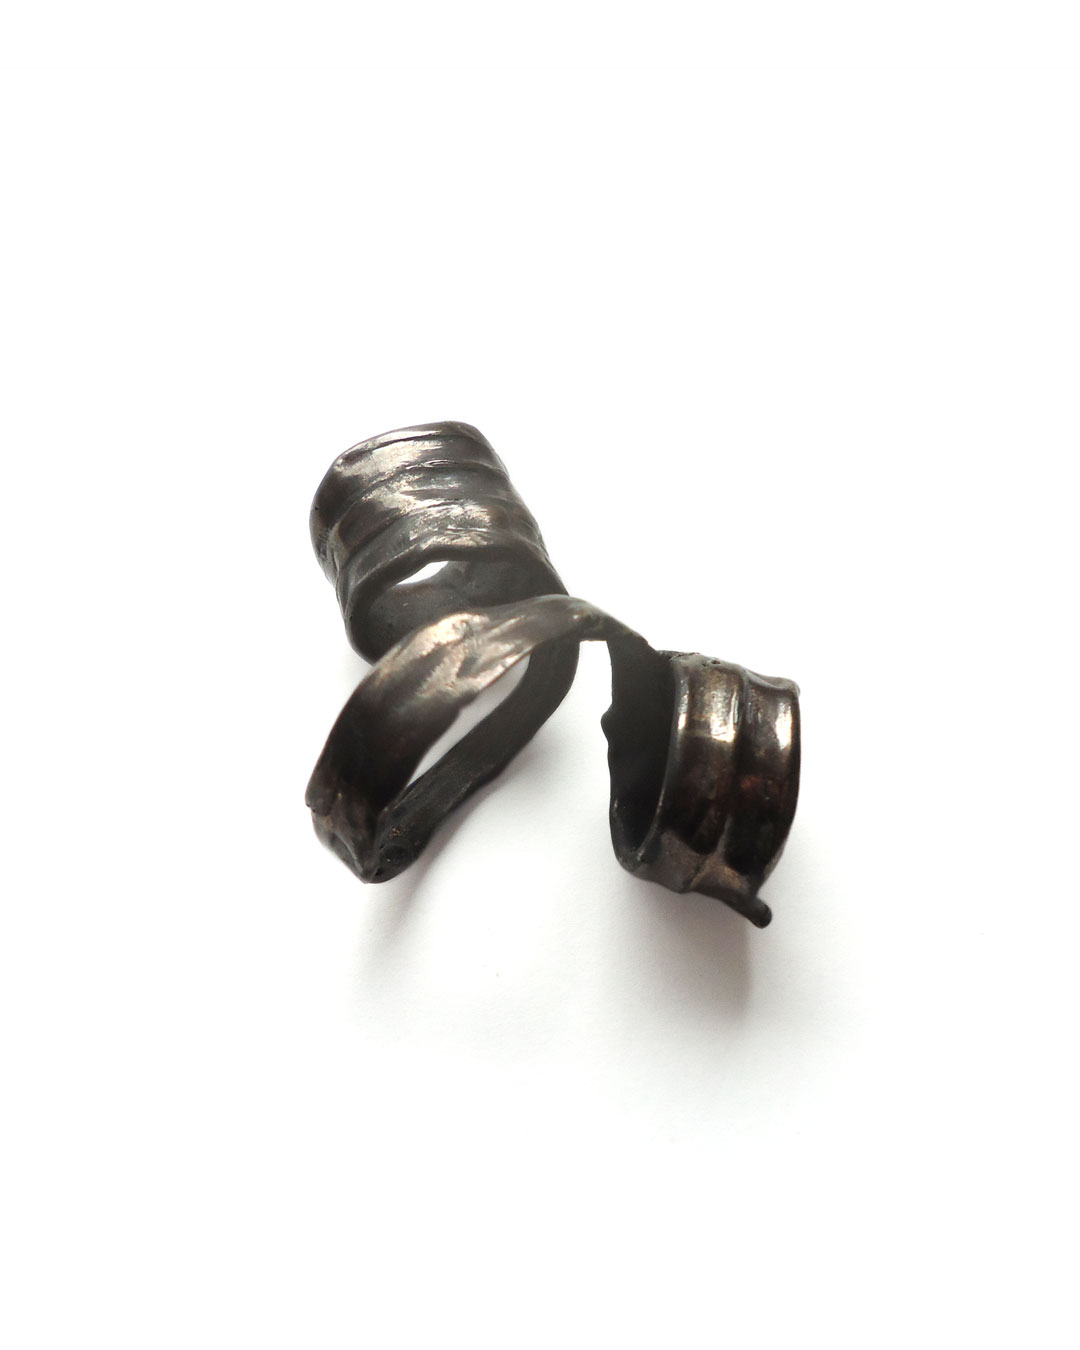 Dana Seachuga, Rebellious-Spring-Ring 6, 2015, ring; bronze, iron, 65 x 45 x 20 mm, €395